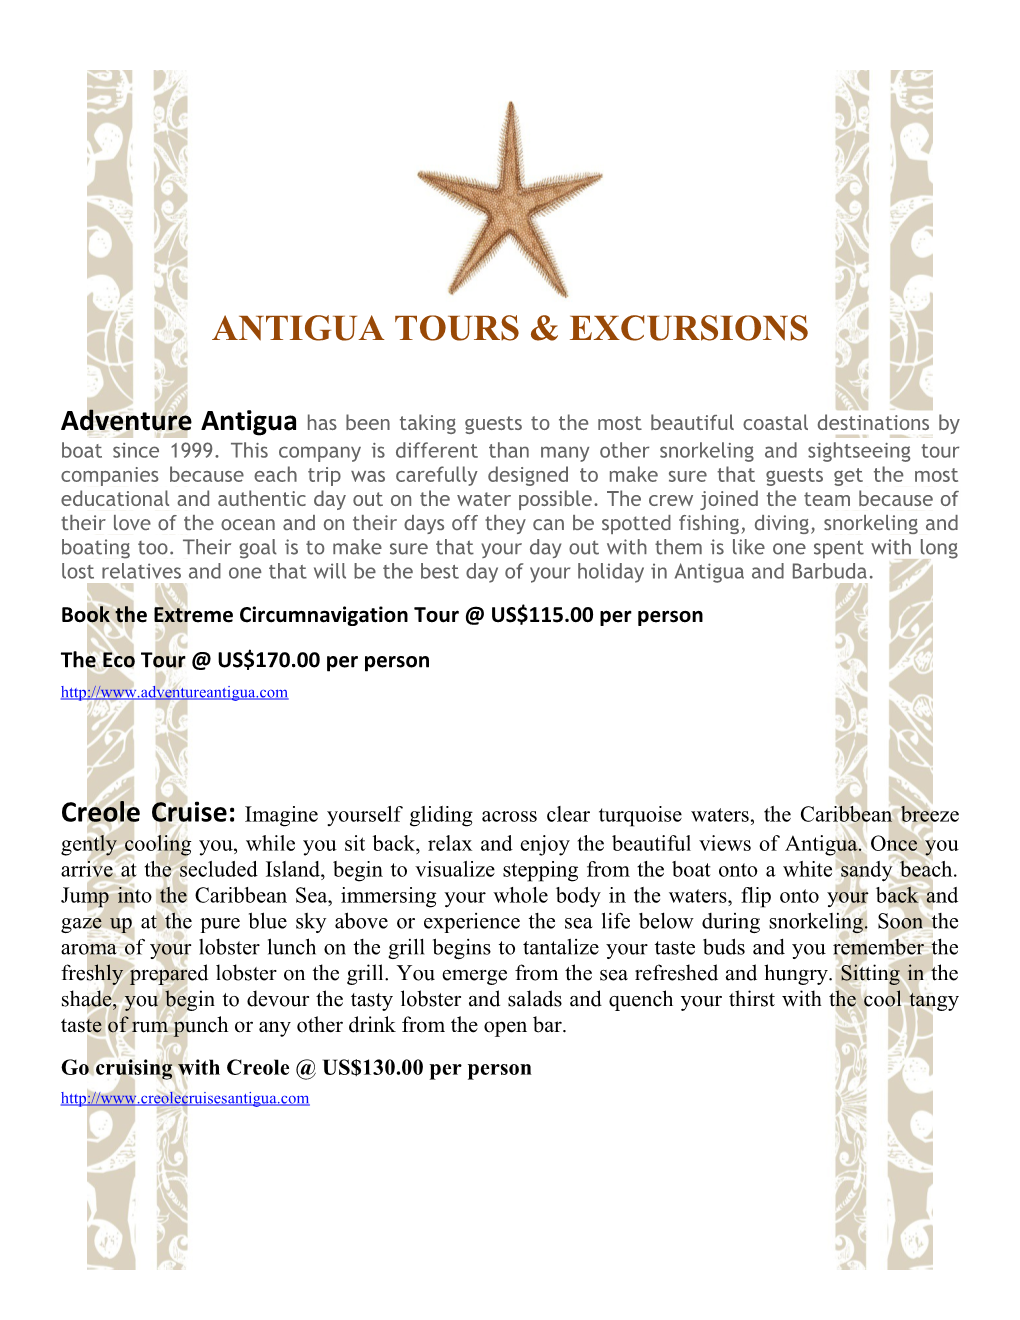 Book the Extreme Circumnavigation Tour US$115.00 Per Person